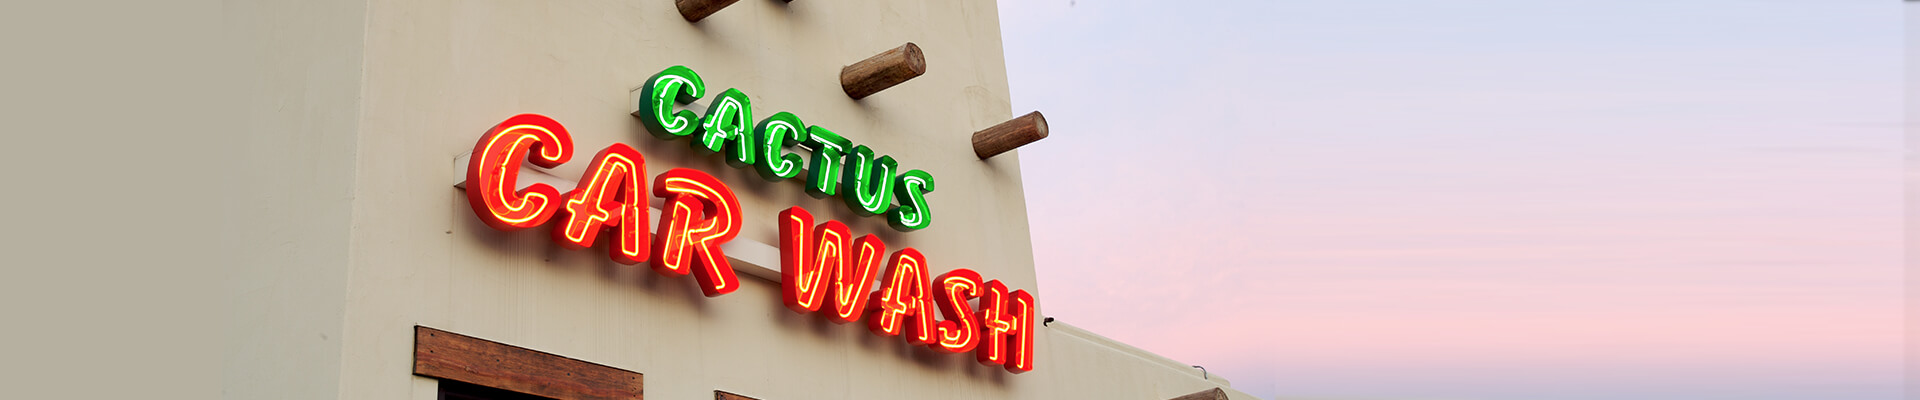 Cactus Milton Location Wins Best Car Wash 2015!